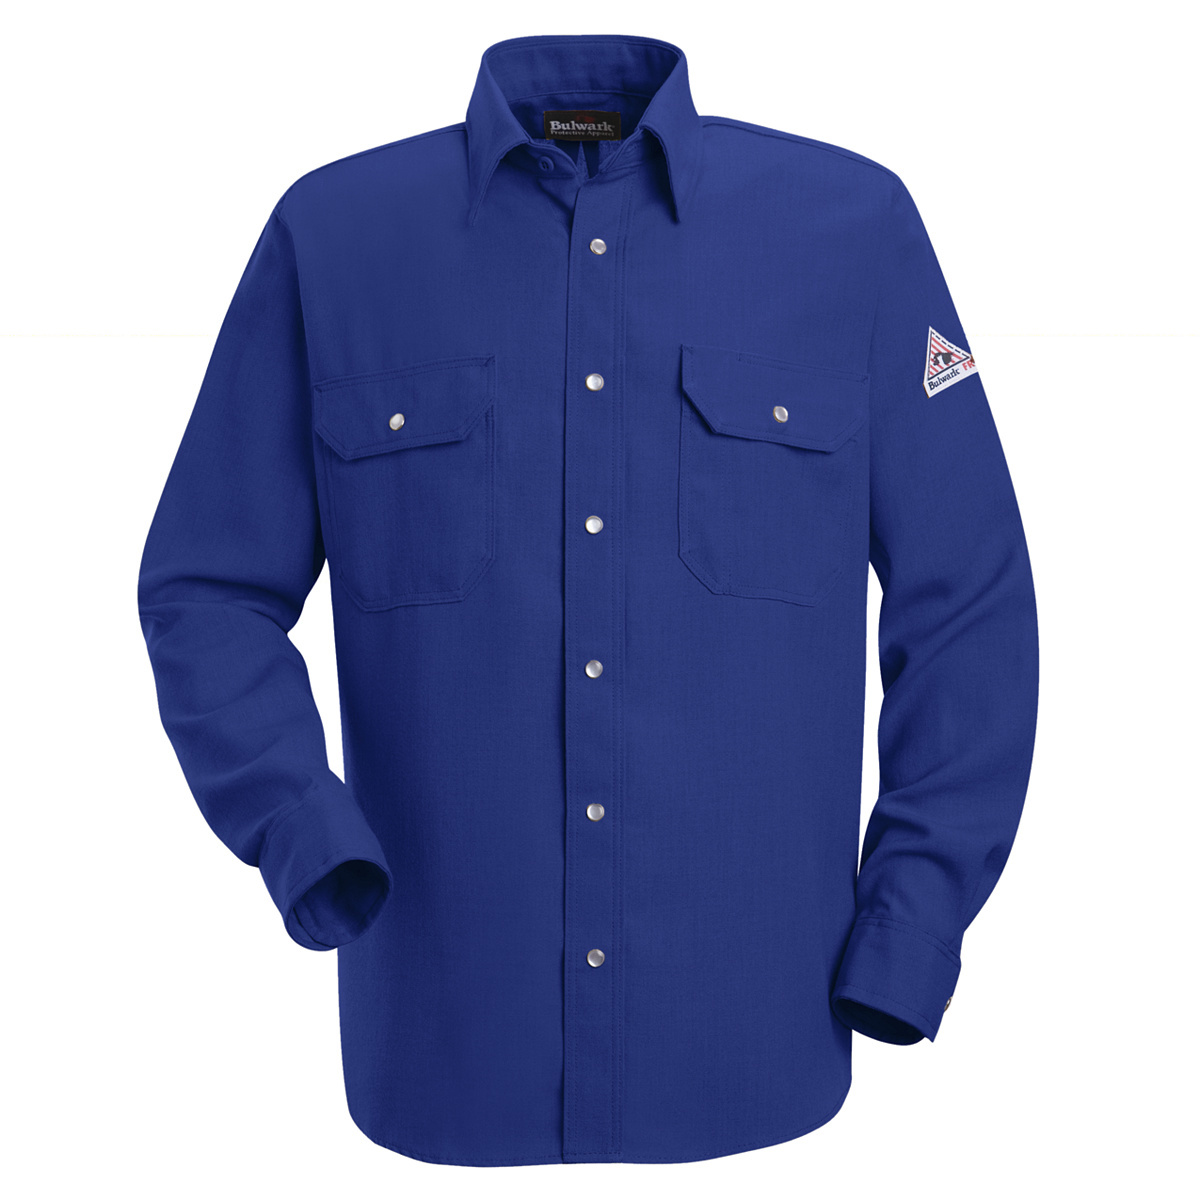 Bulwark® 2X Tall Royal Blue Nomex® IIIA/Nomex® Aramid/Kevlar® Aramid Flame Resistant Uniform Shirt With Snap Front Closure